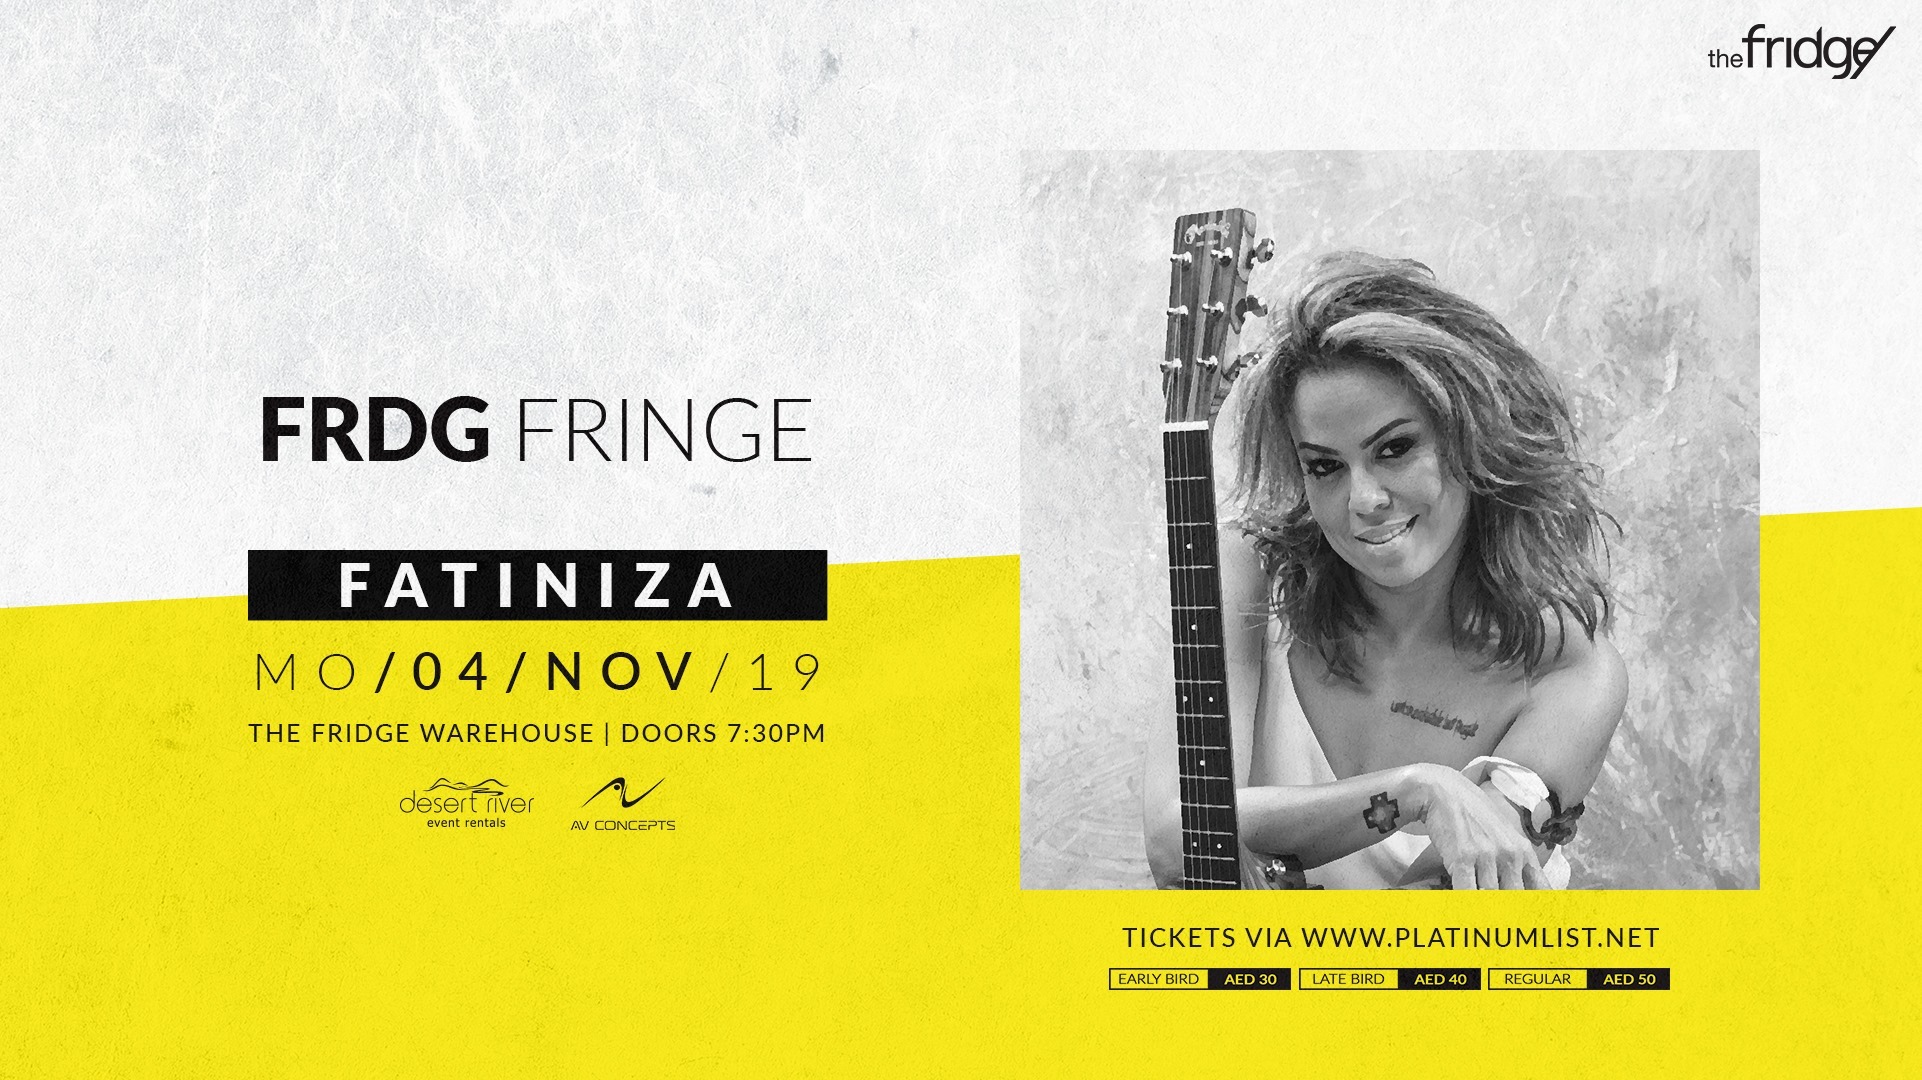 FRDG Fringe presents: Fatiniza - Coming Soon in UAE